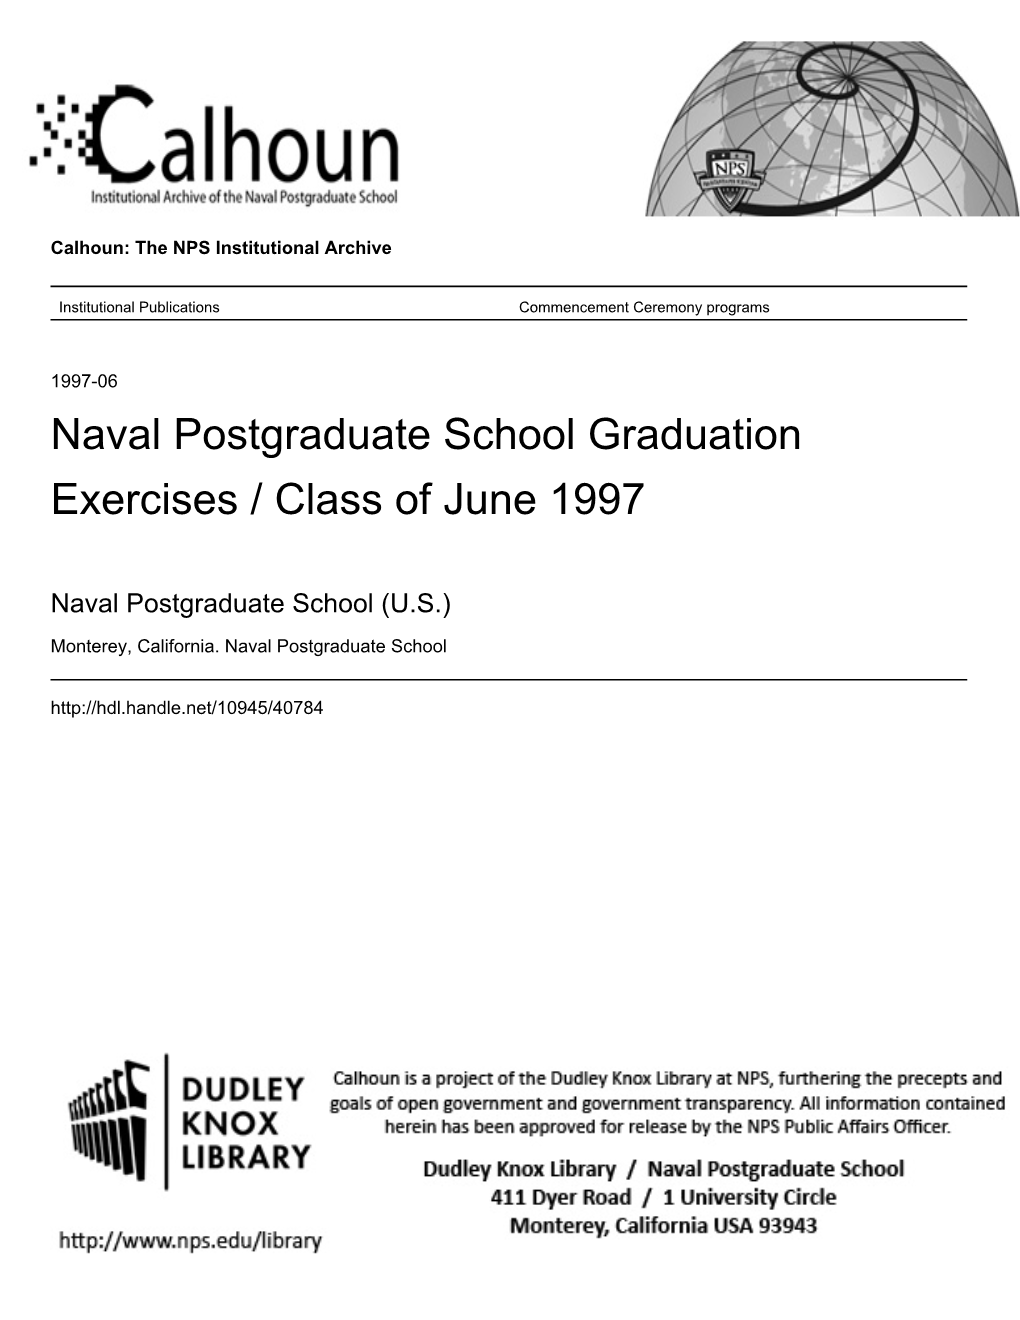 Naval Postgraduate School Graduation Exercises / Class of June 1997